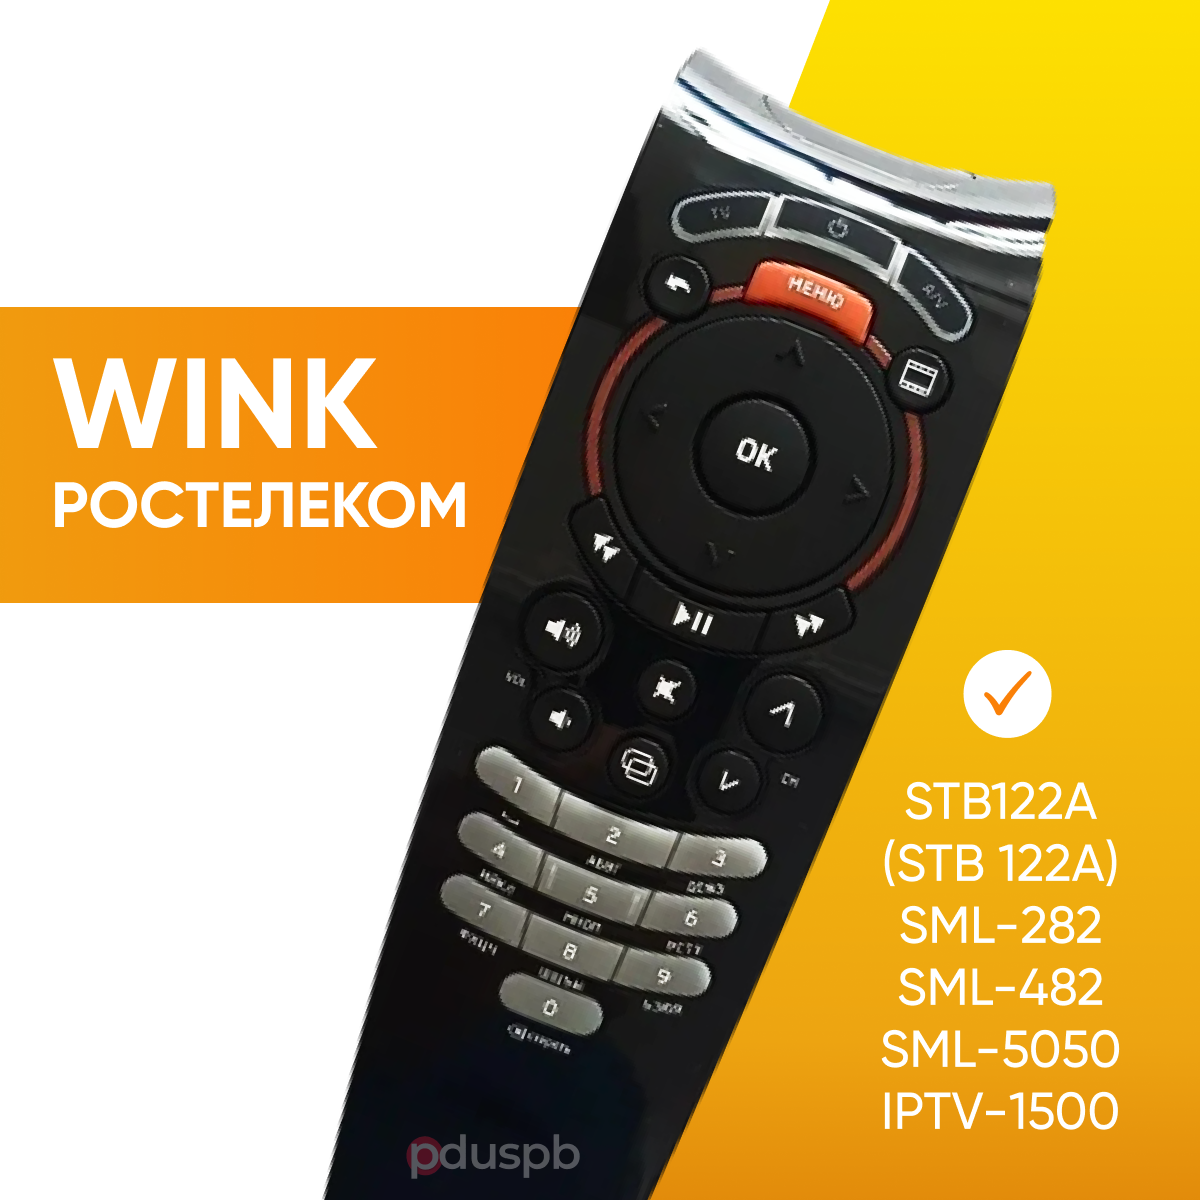 Пульт PDUSPB для Wink / Ростелеком (Rostelecom) STB122A (STB 122A) SML-282 SML-482 SML-5050